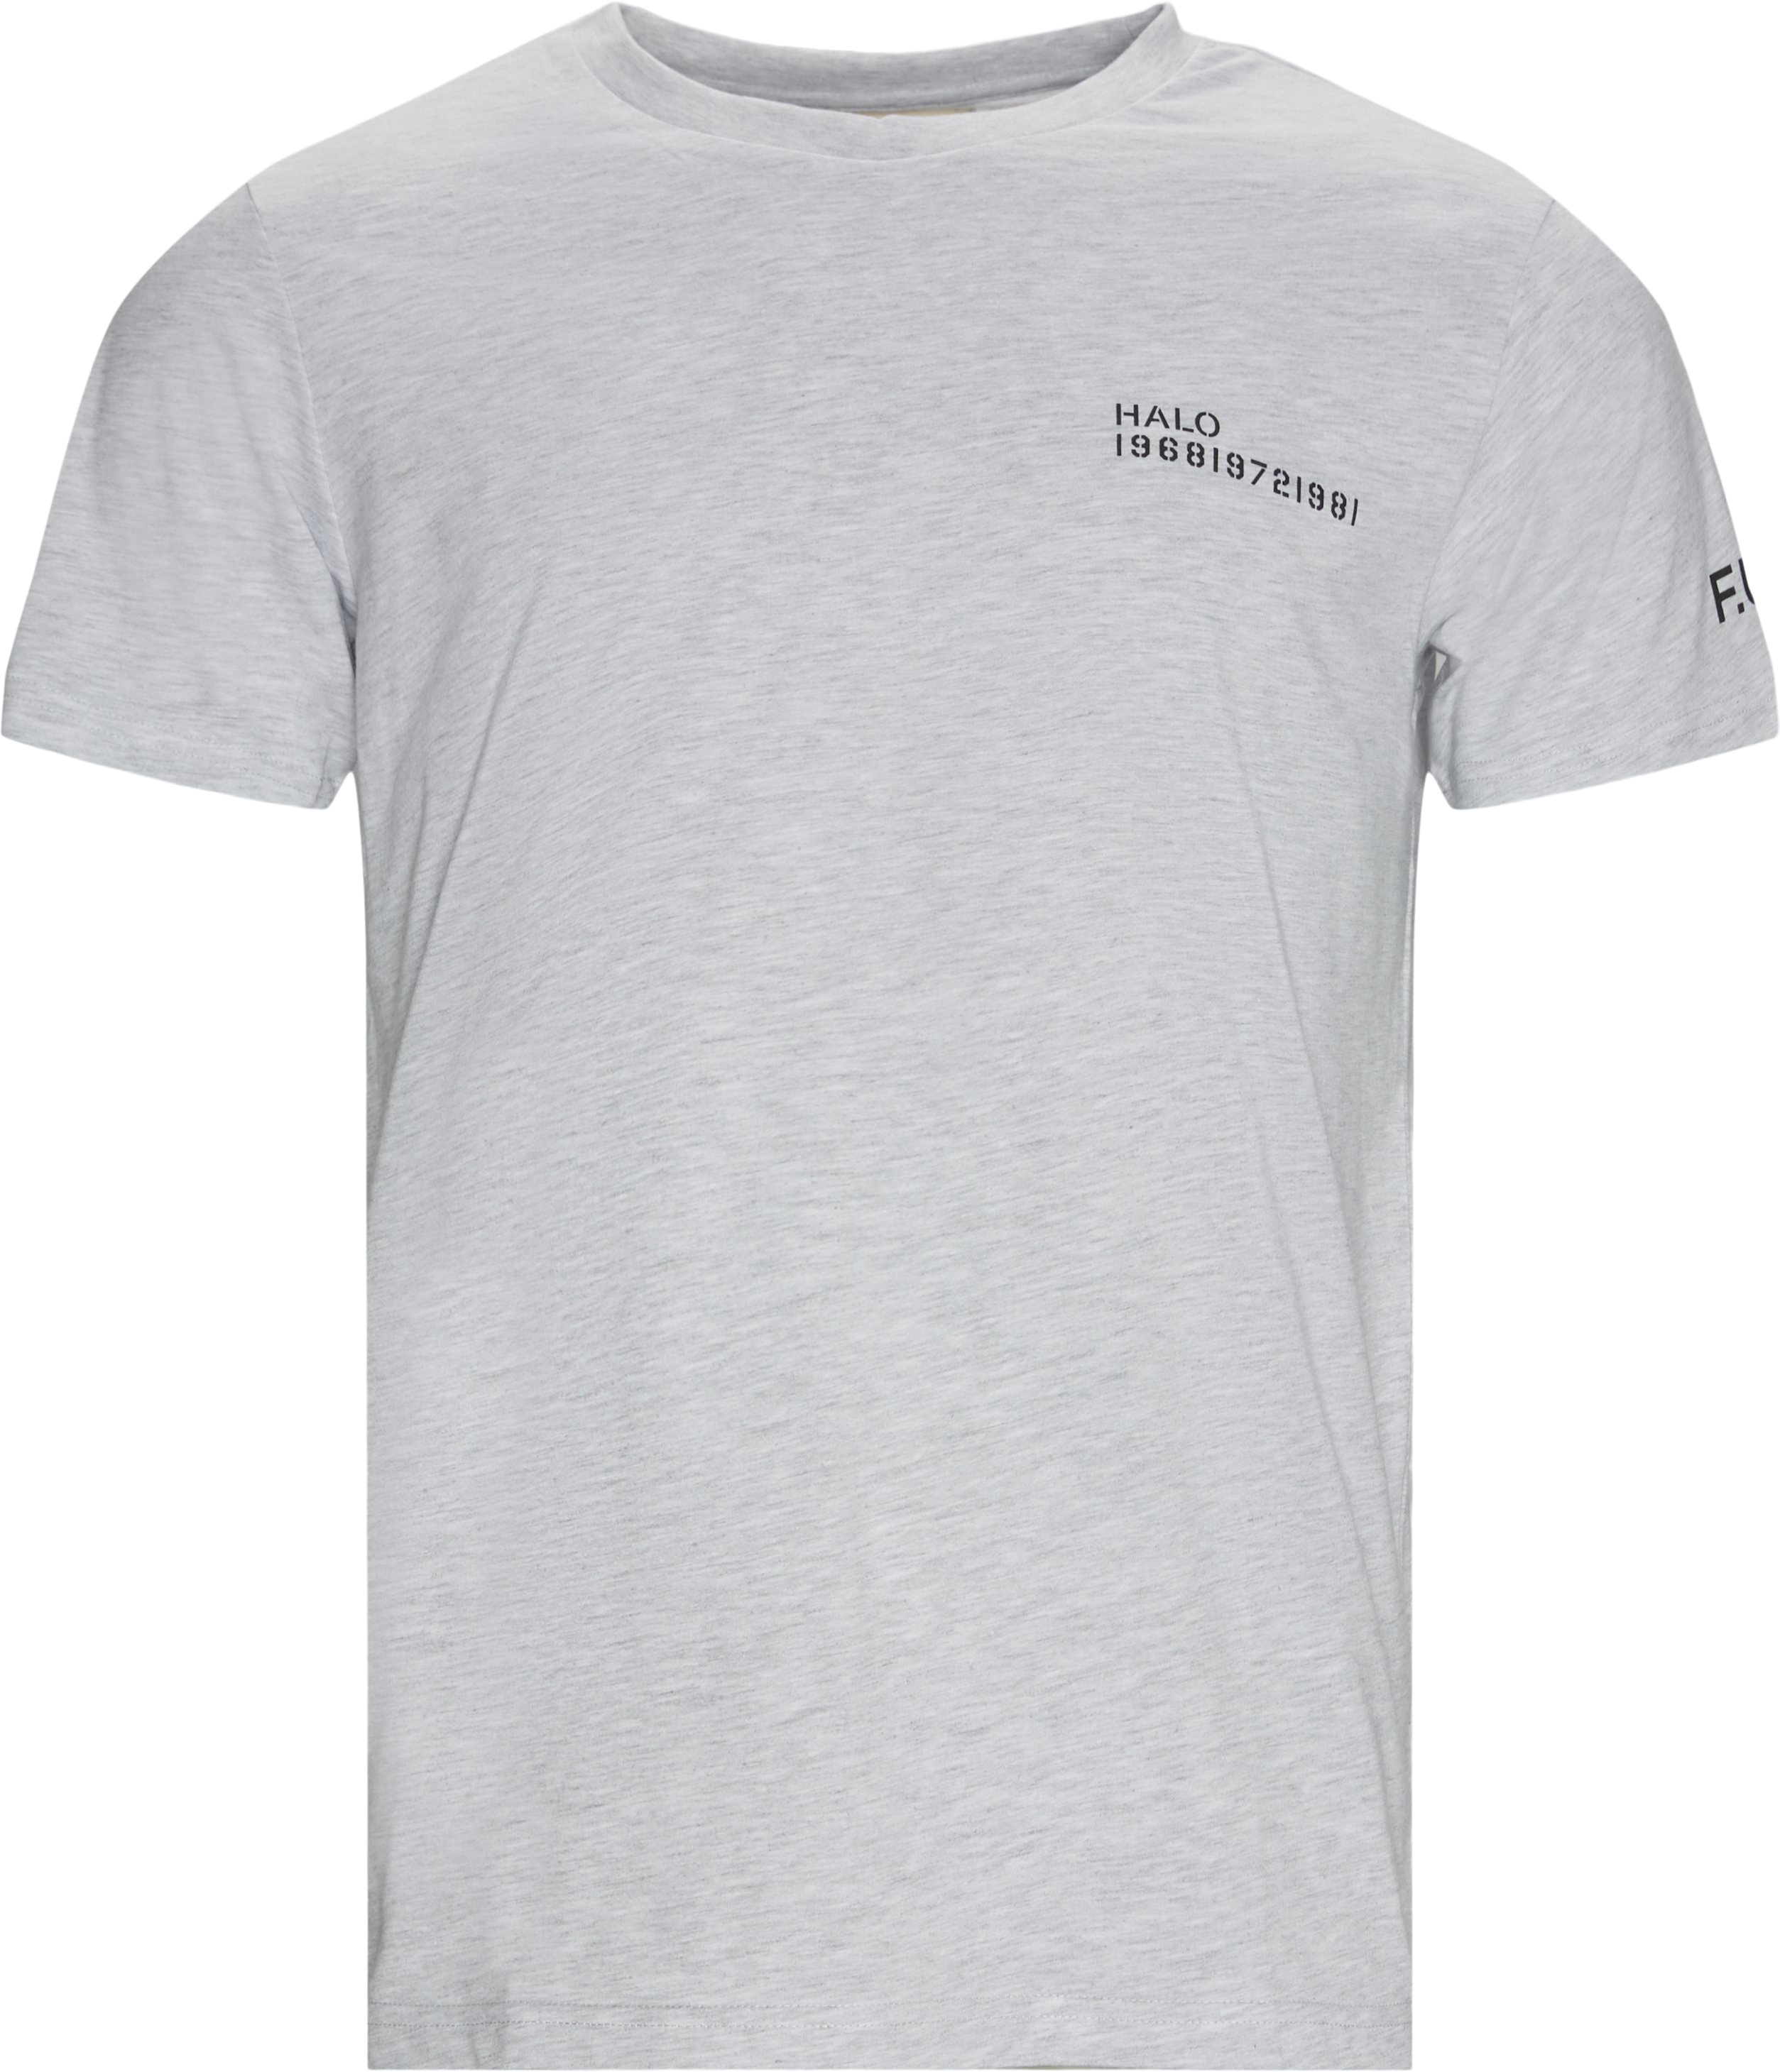 Cotton Tee  - T-shirts - Regular fit - Grey